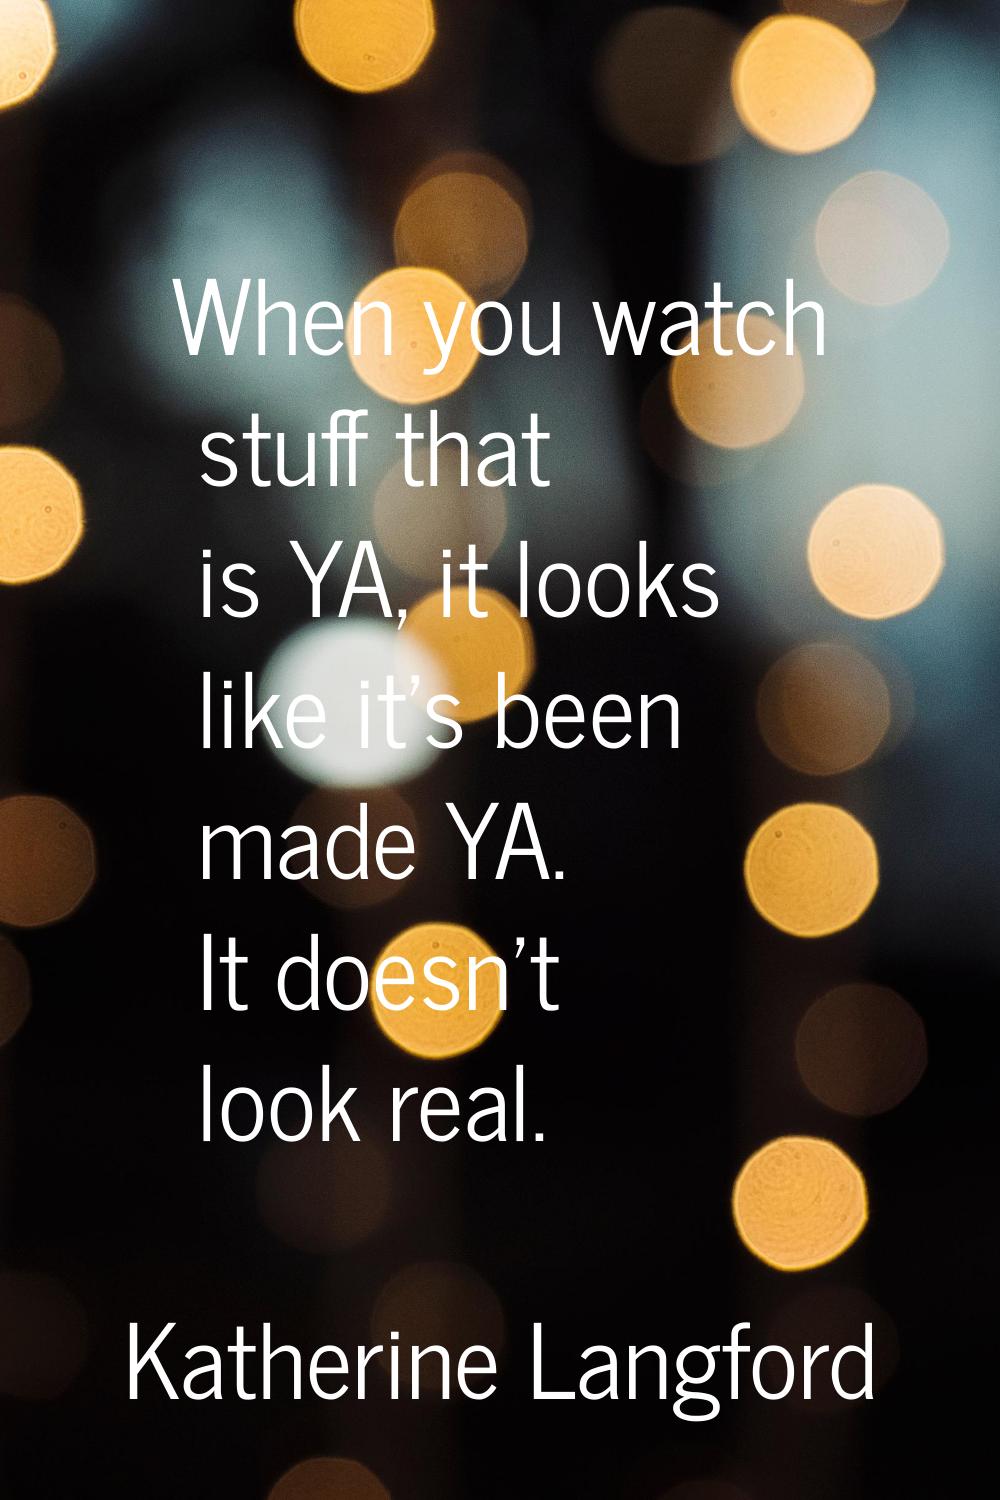 When you watch stuff that is YA, it looks like it's been made YA. It doesn't look real.